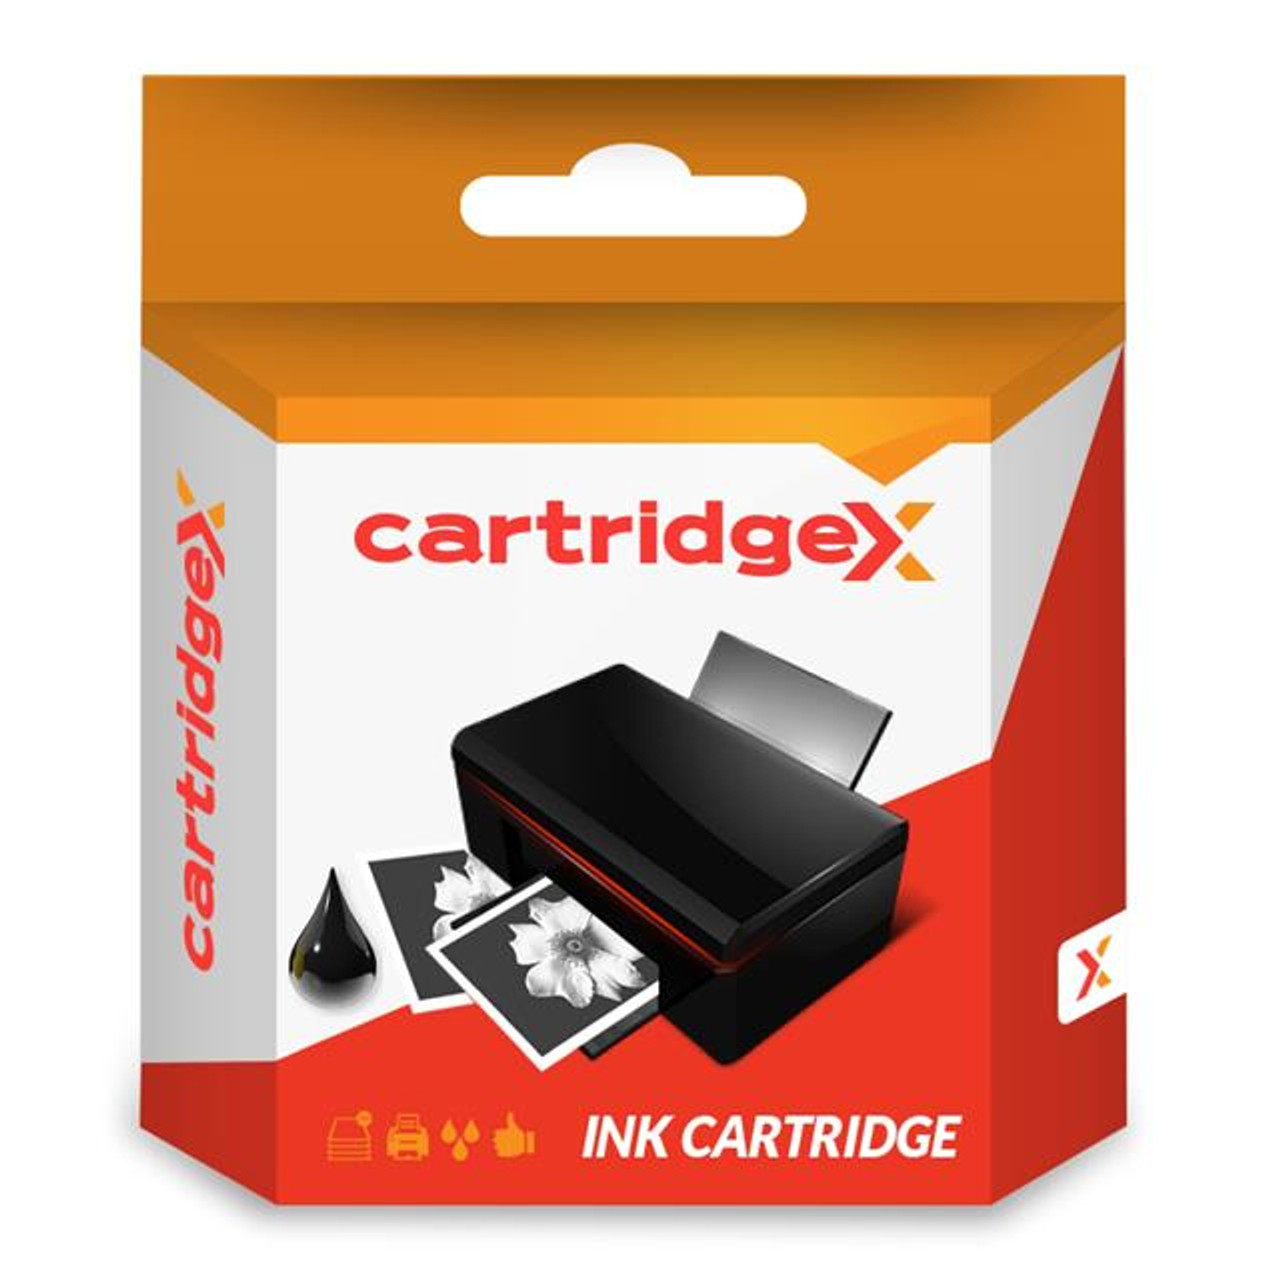 Compatible Ink Cartridge HP 303 XL Black 20ml